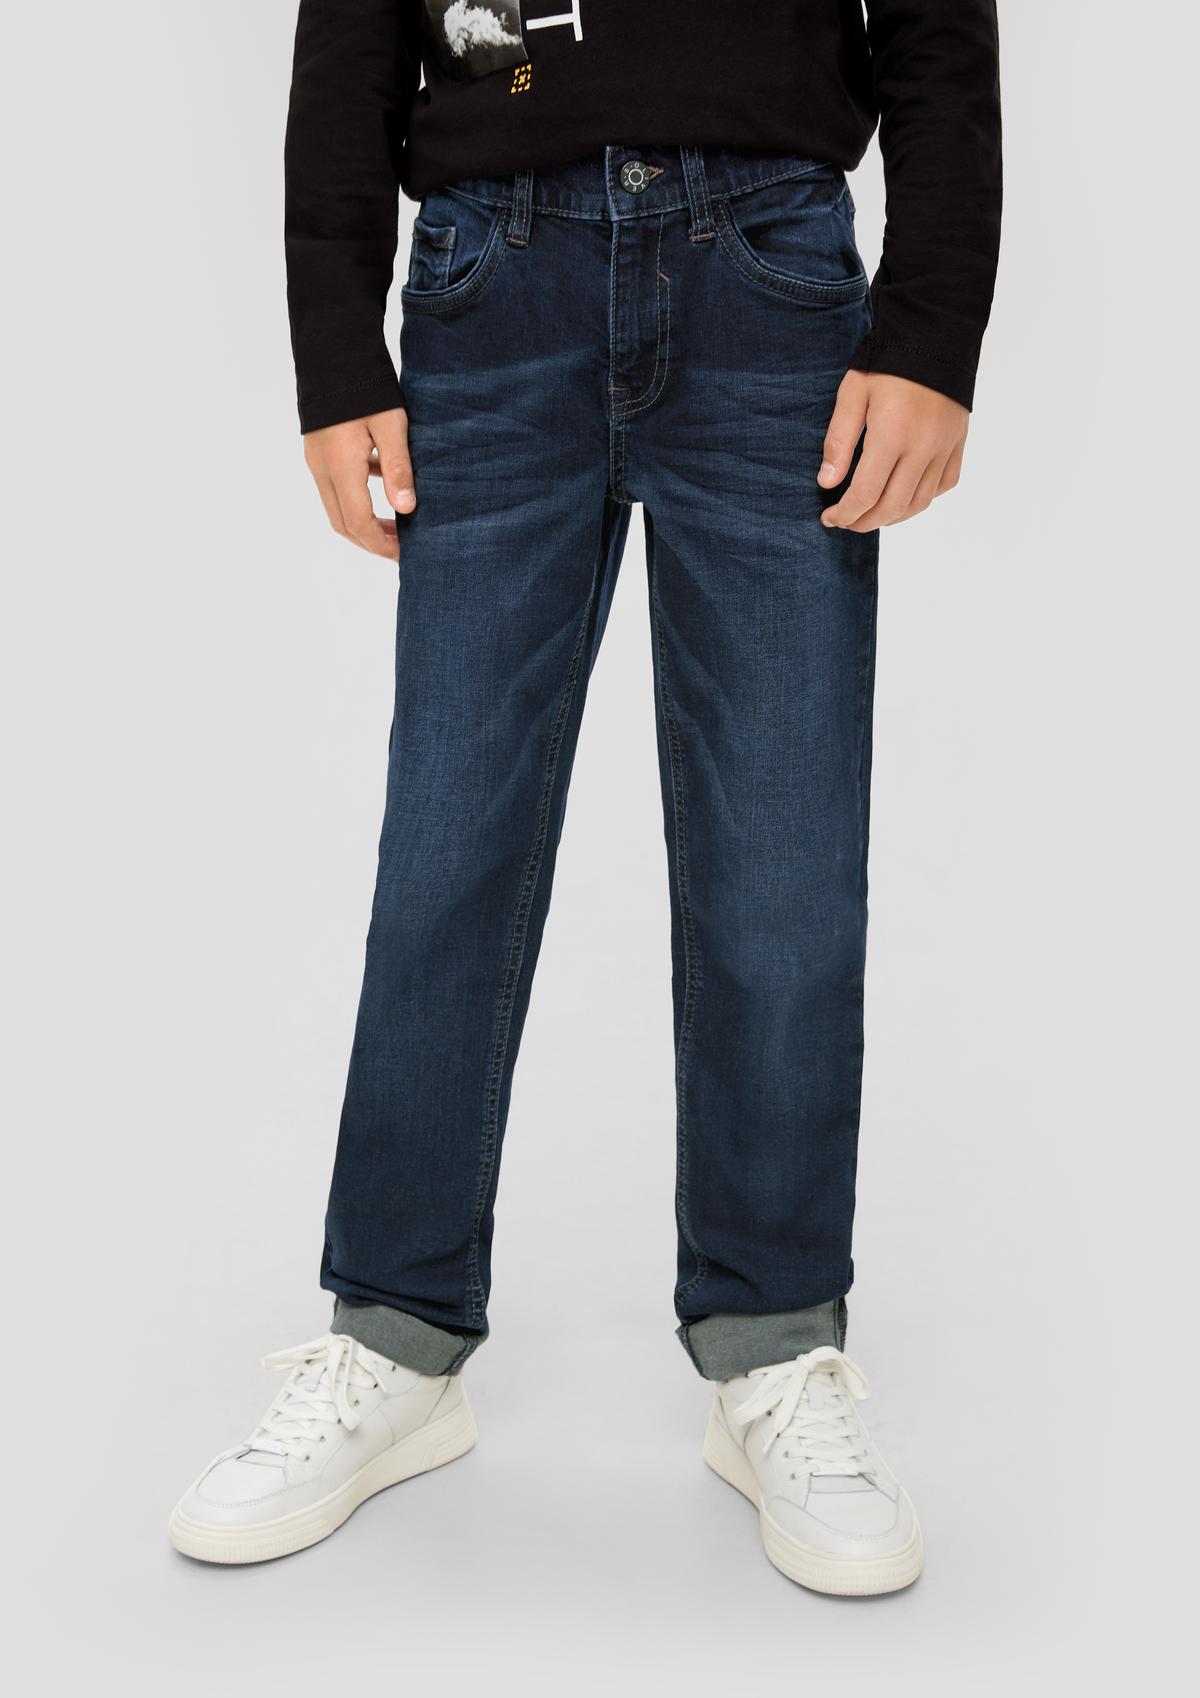 Jeans Seattle / Regular Fit / Mid Rise / Slim Leg